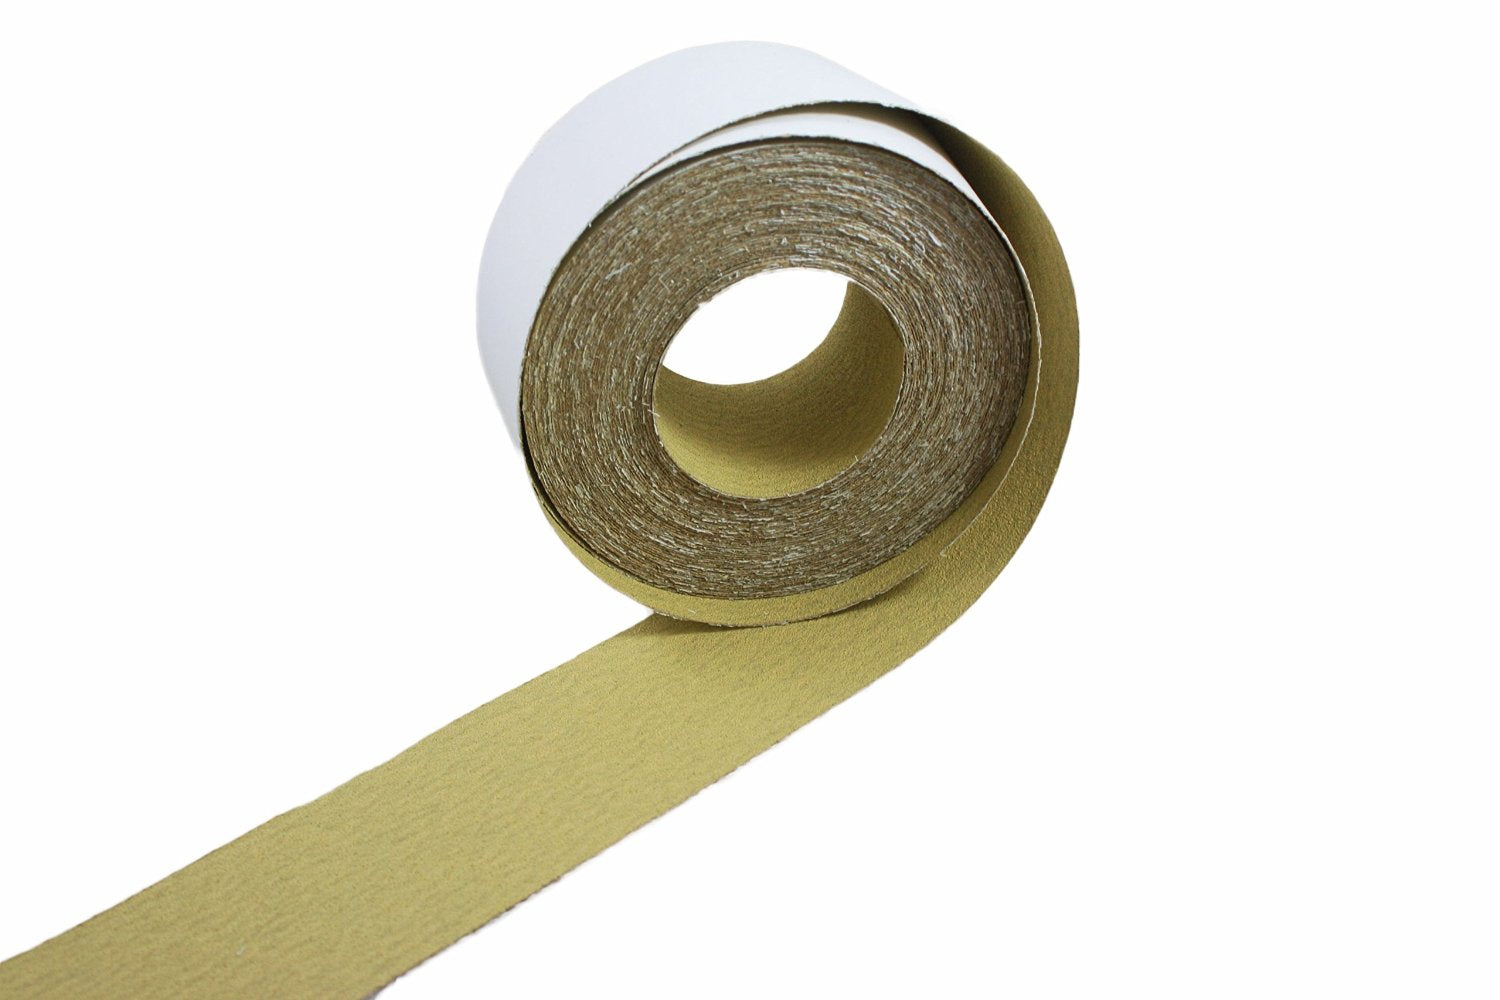 Adhesive Aluminum Oxide Sandpaper Roll 2-3/4” Inch x 20 Yards